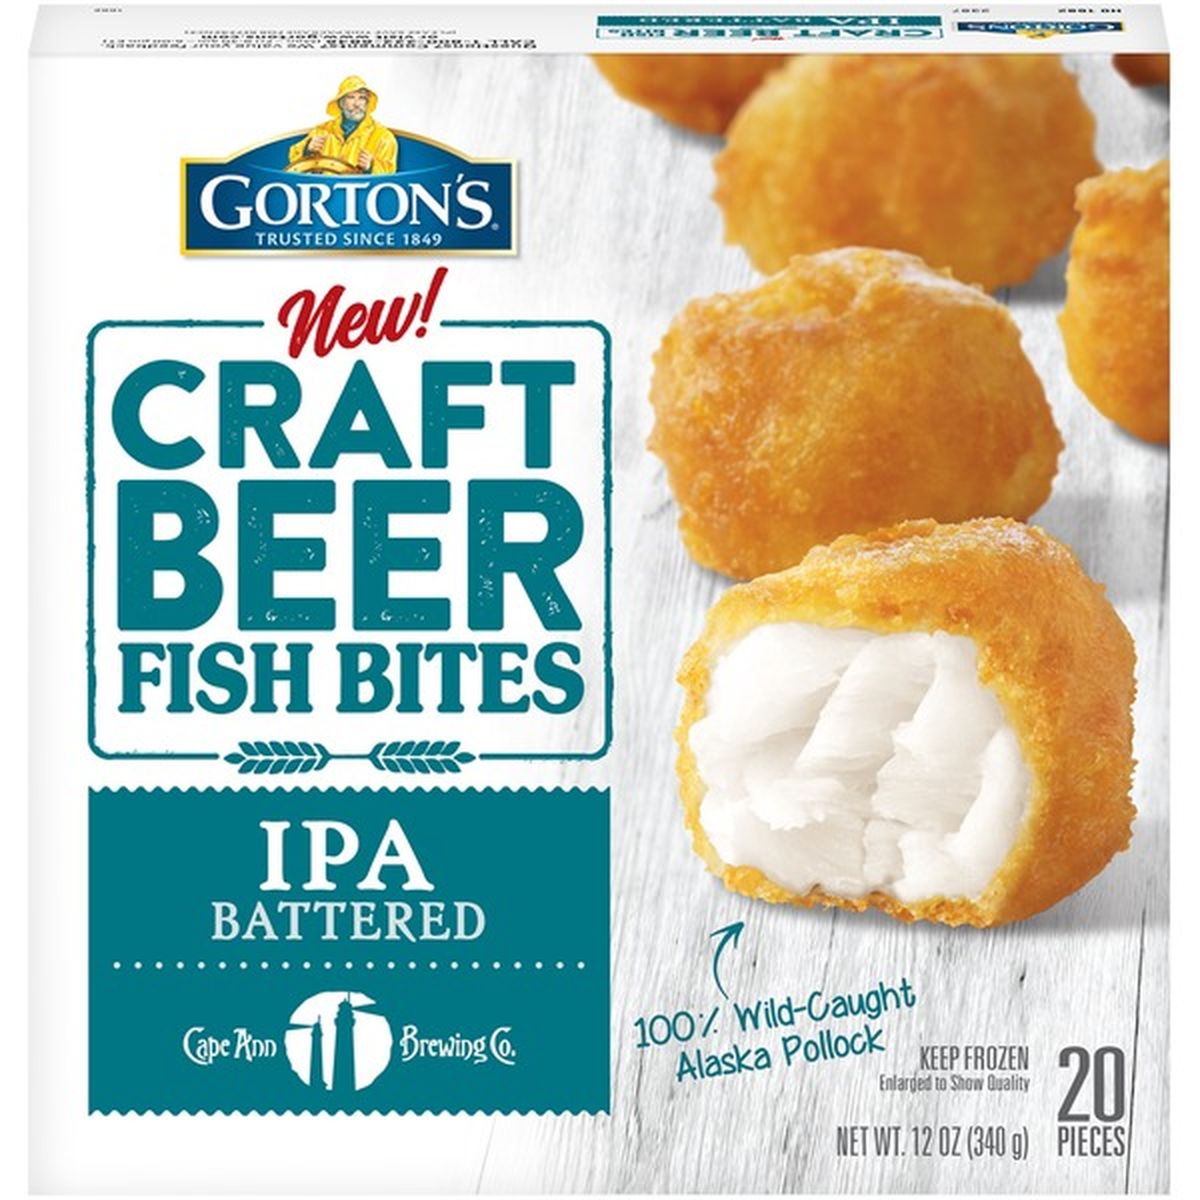 Gorton's Craft Beer IPA Battered Fish Bites (12 oz) Delivery or